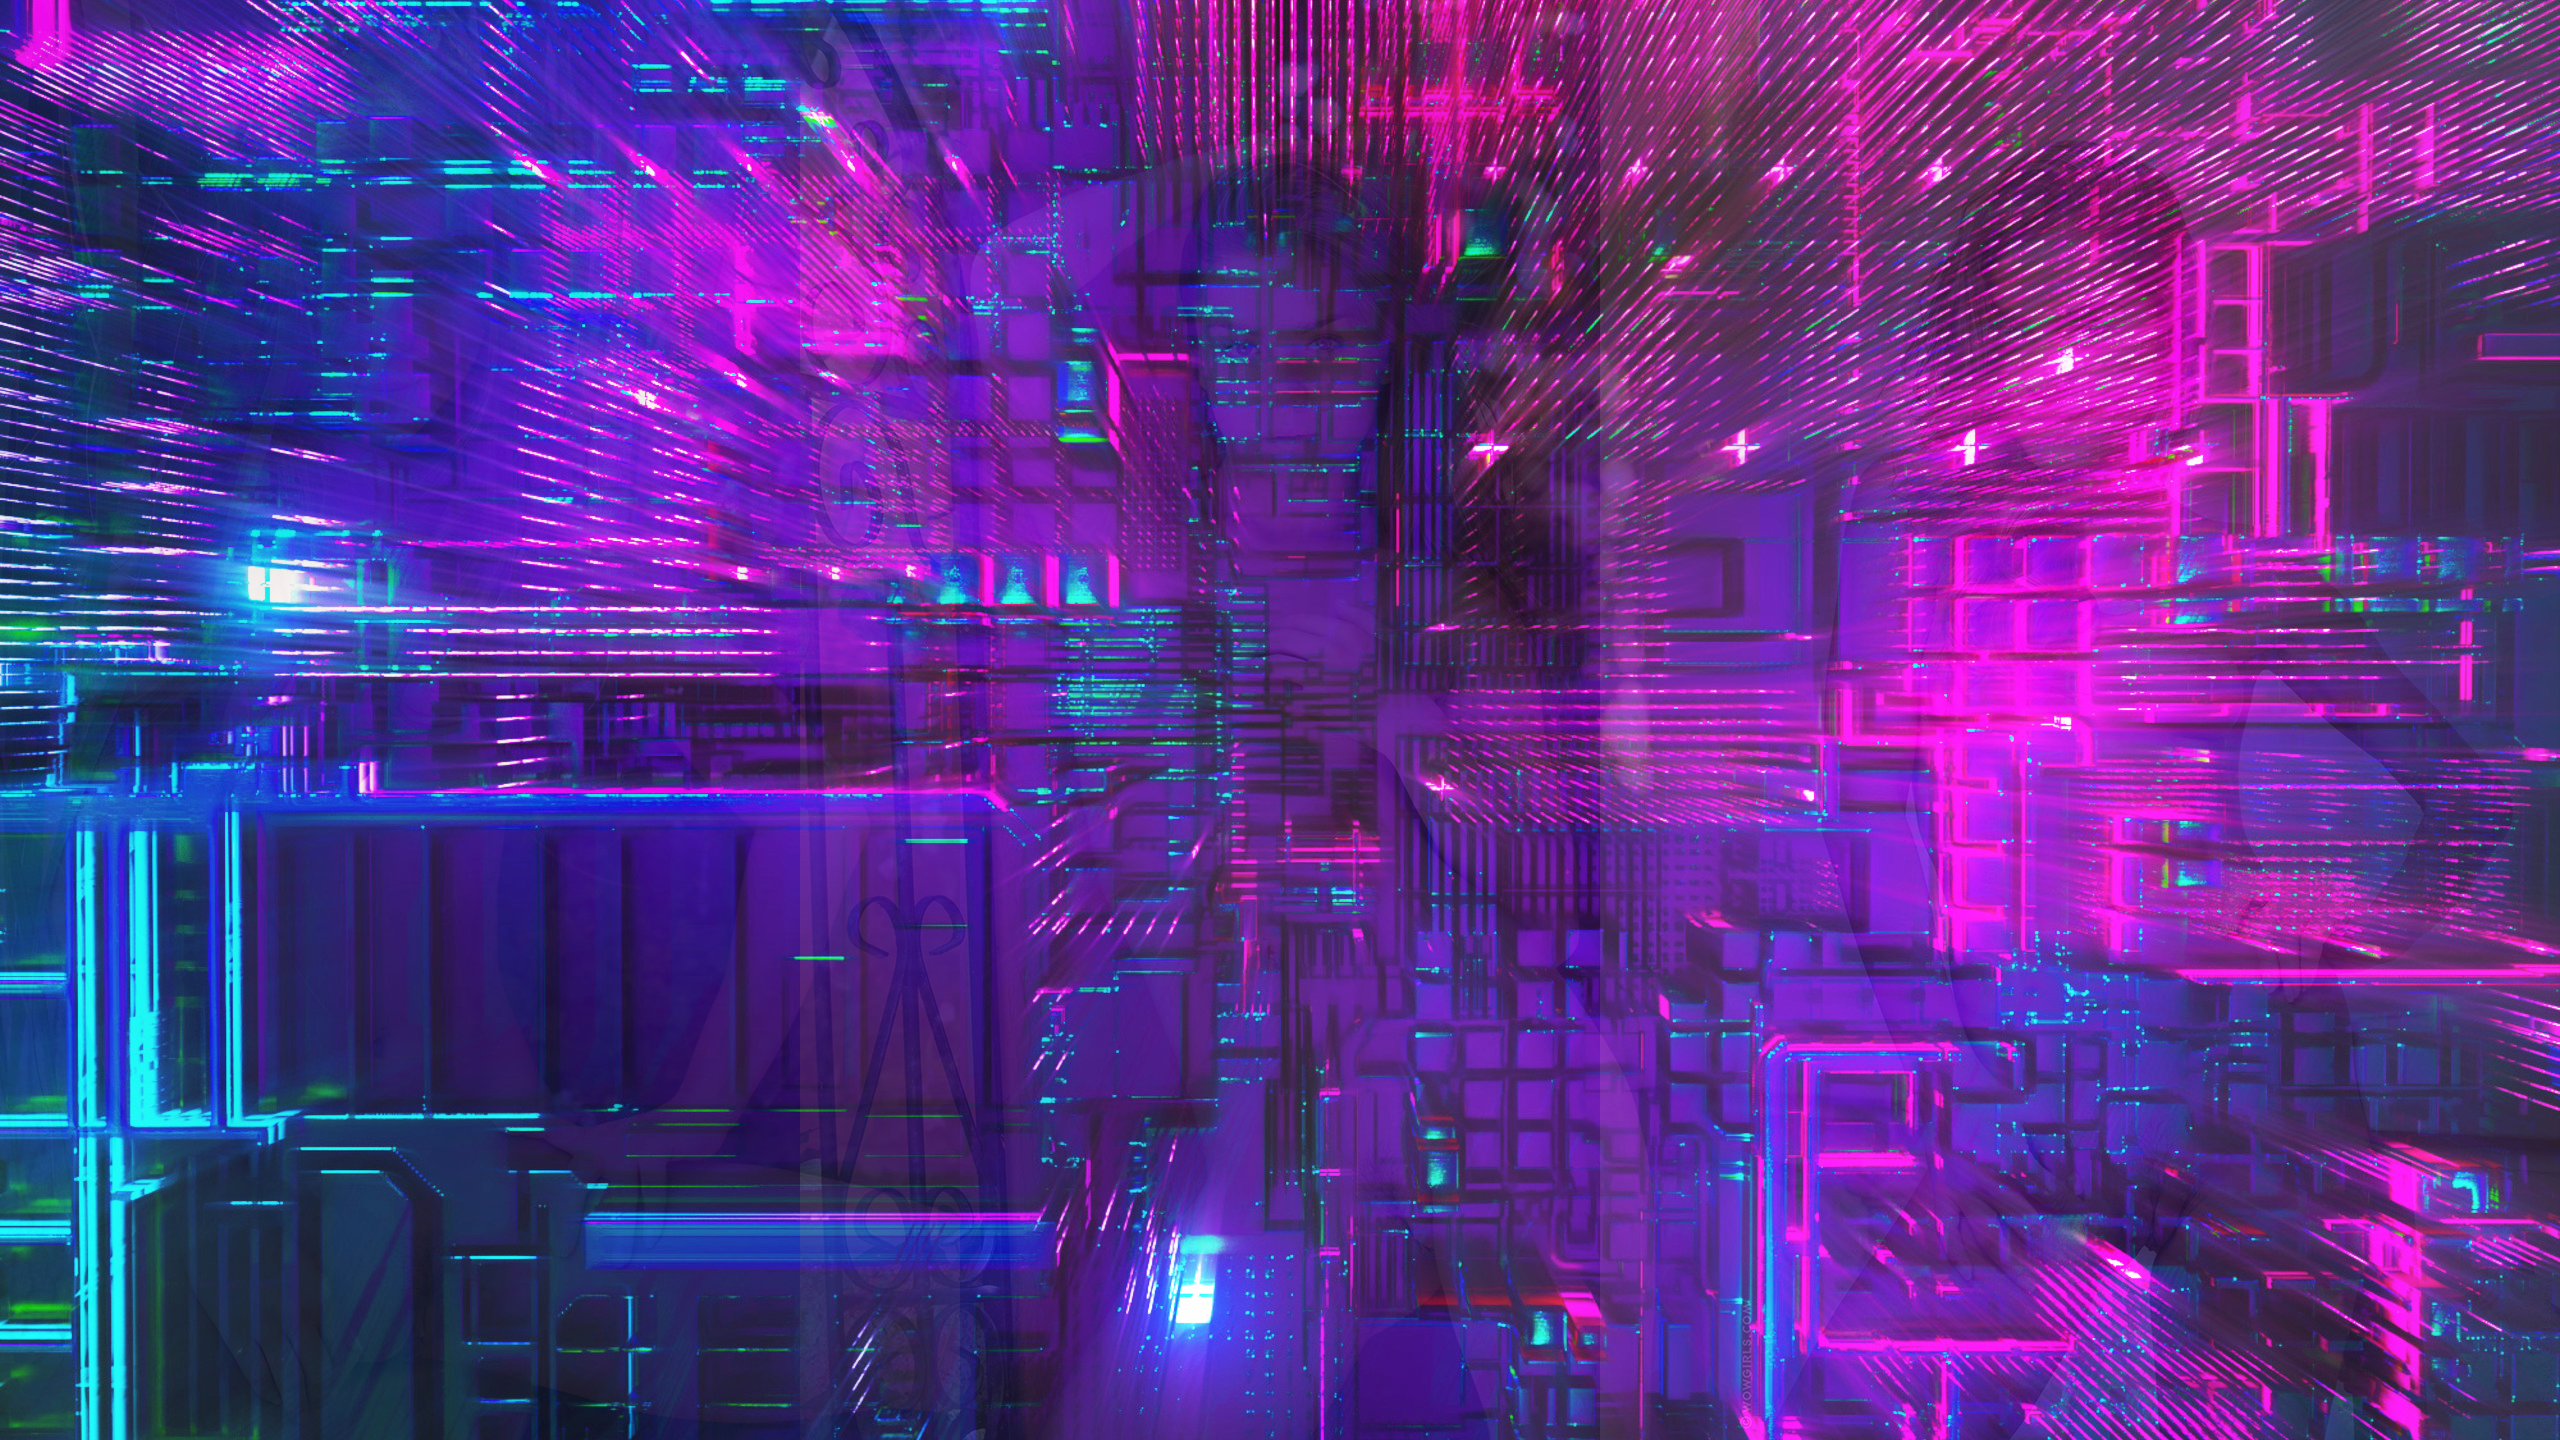 General 2560x1440 steganography circuit vaporwave neon purple blue